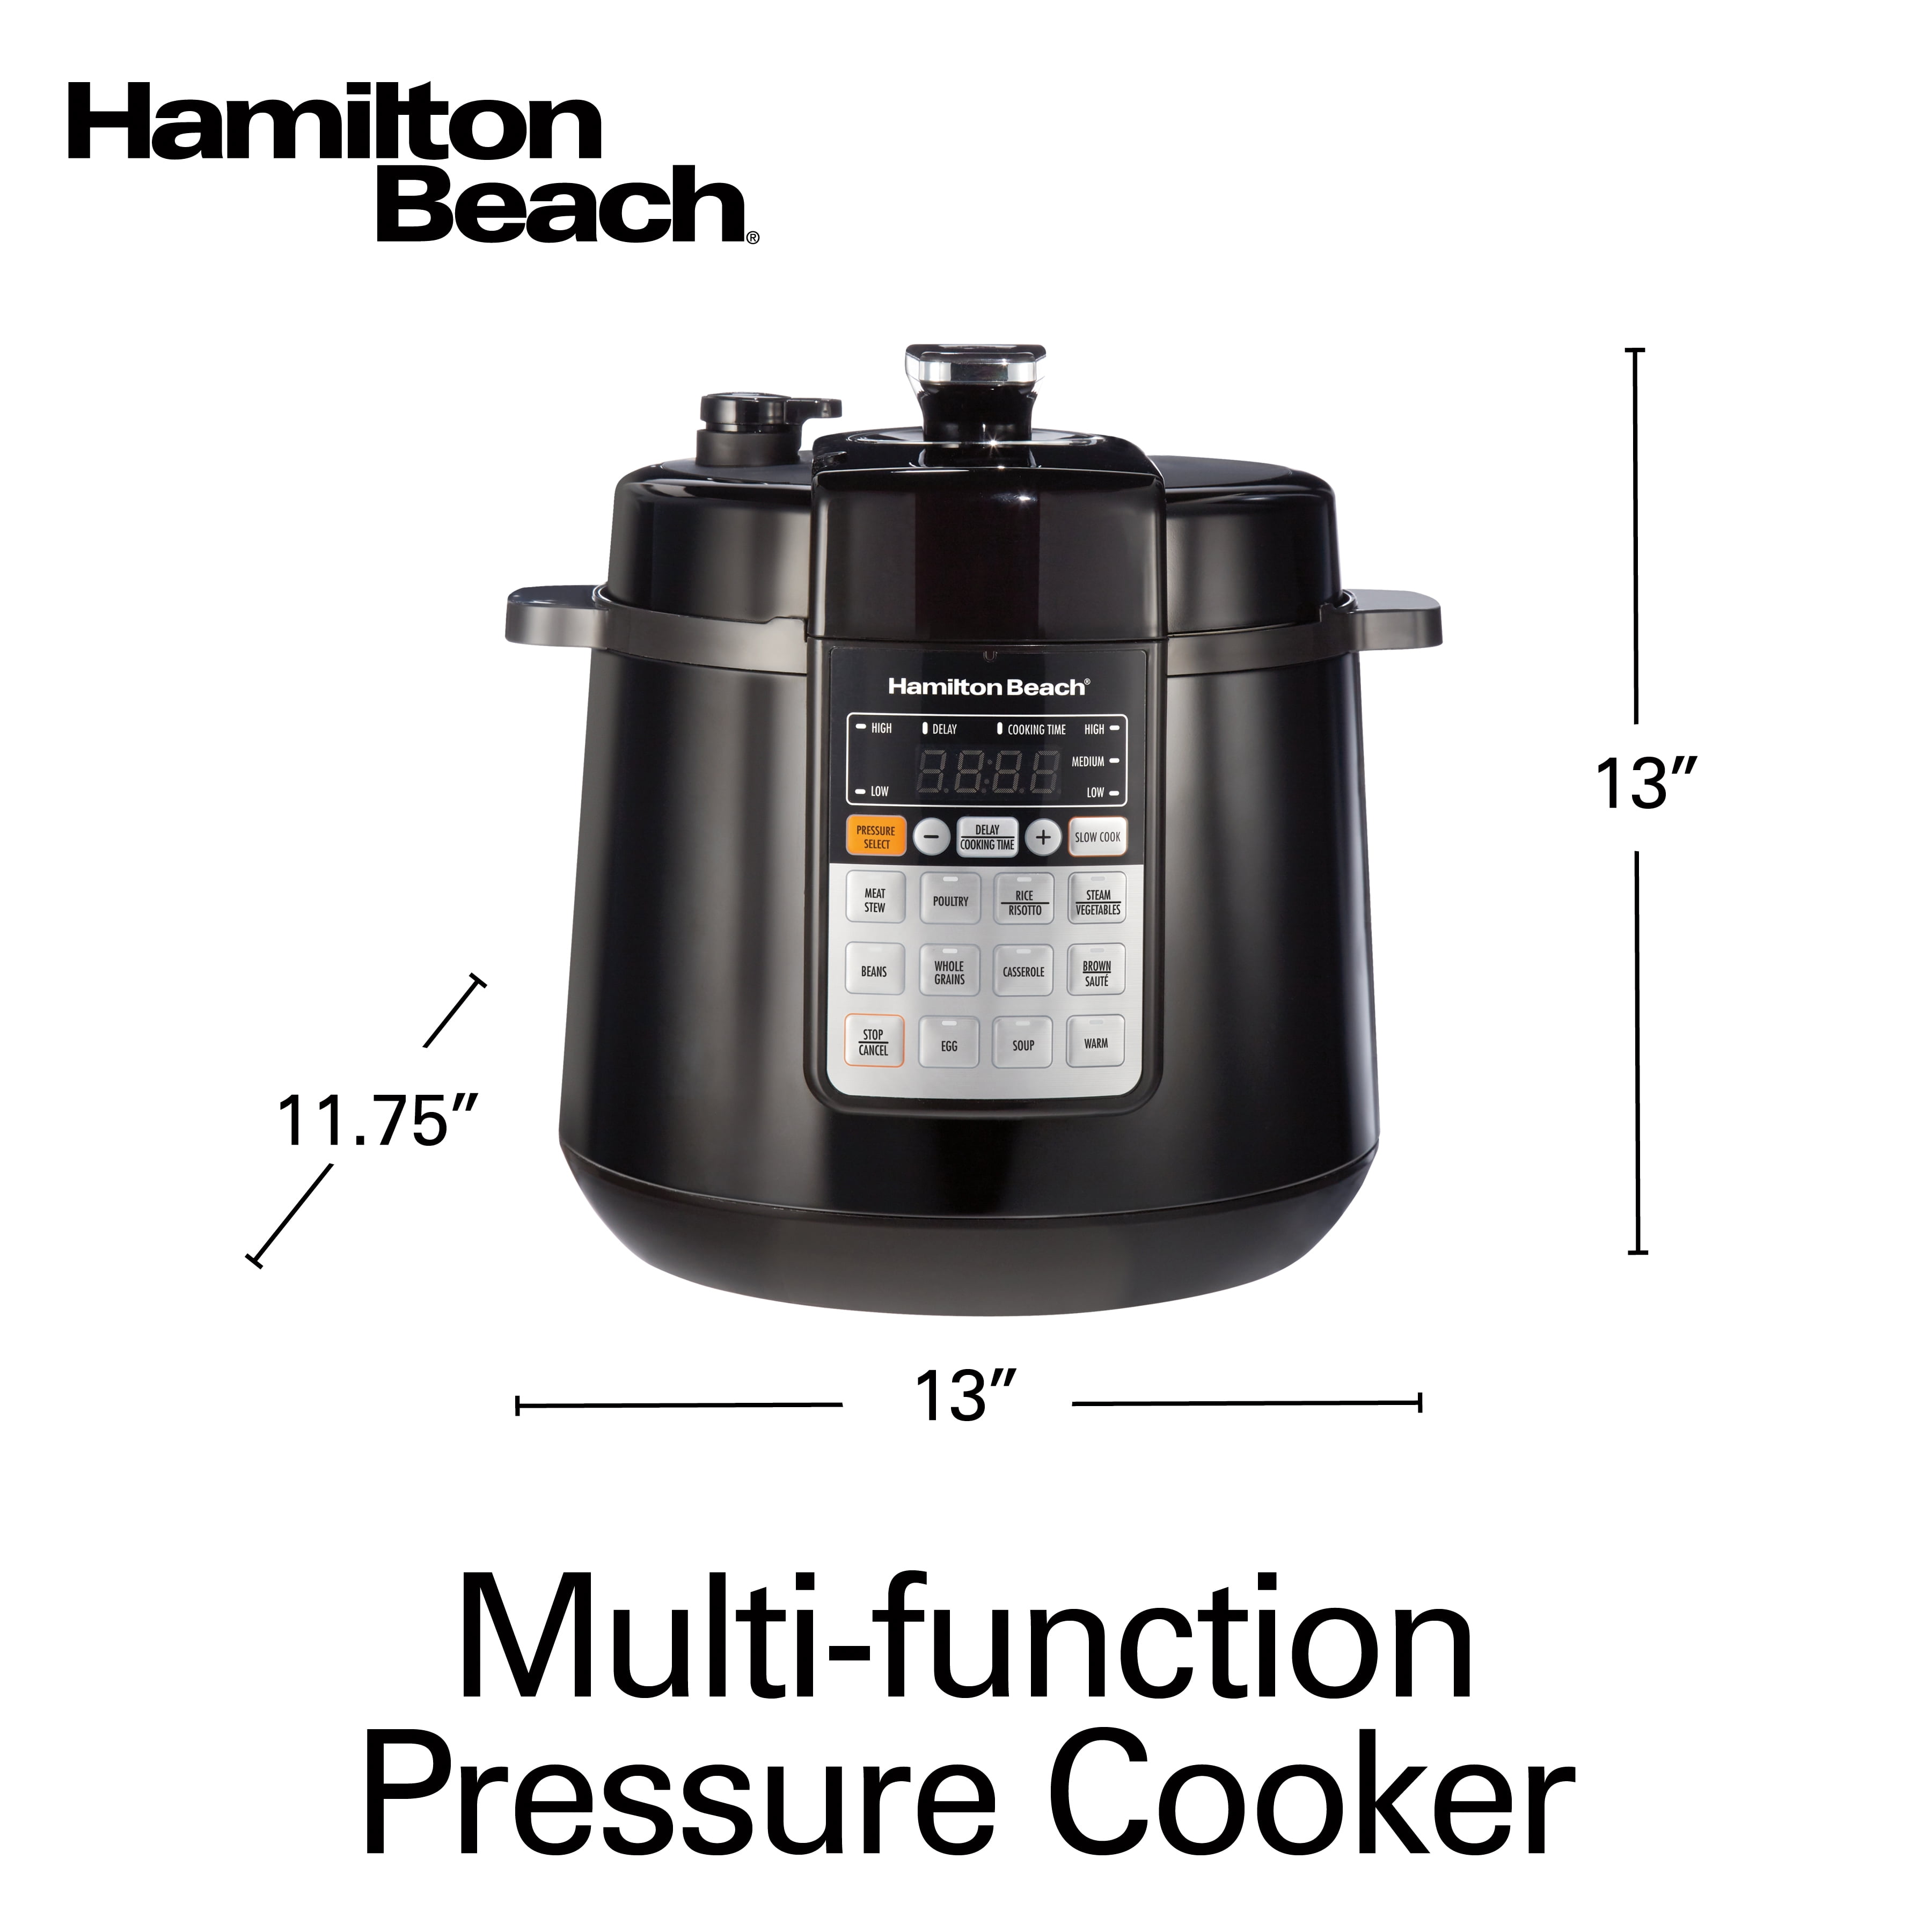 Hamilton Beach 33065 6 Quart 9-in-1 Multi Cooker / Rice Cooker